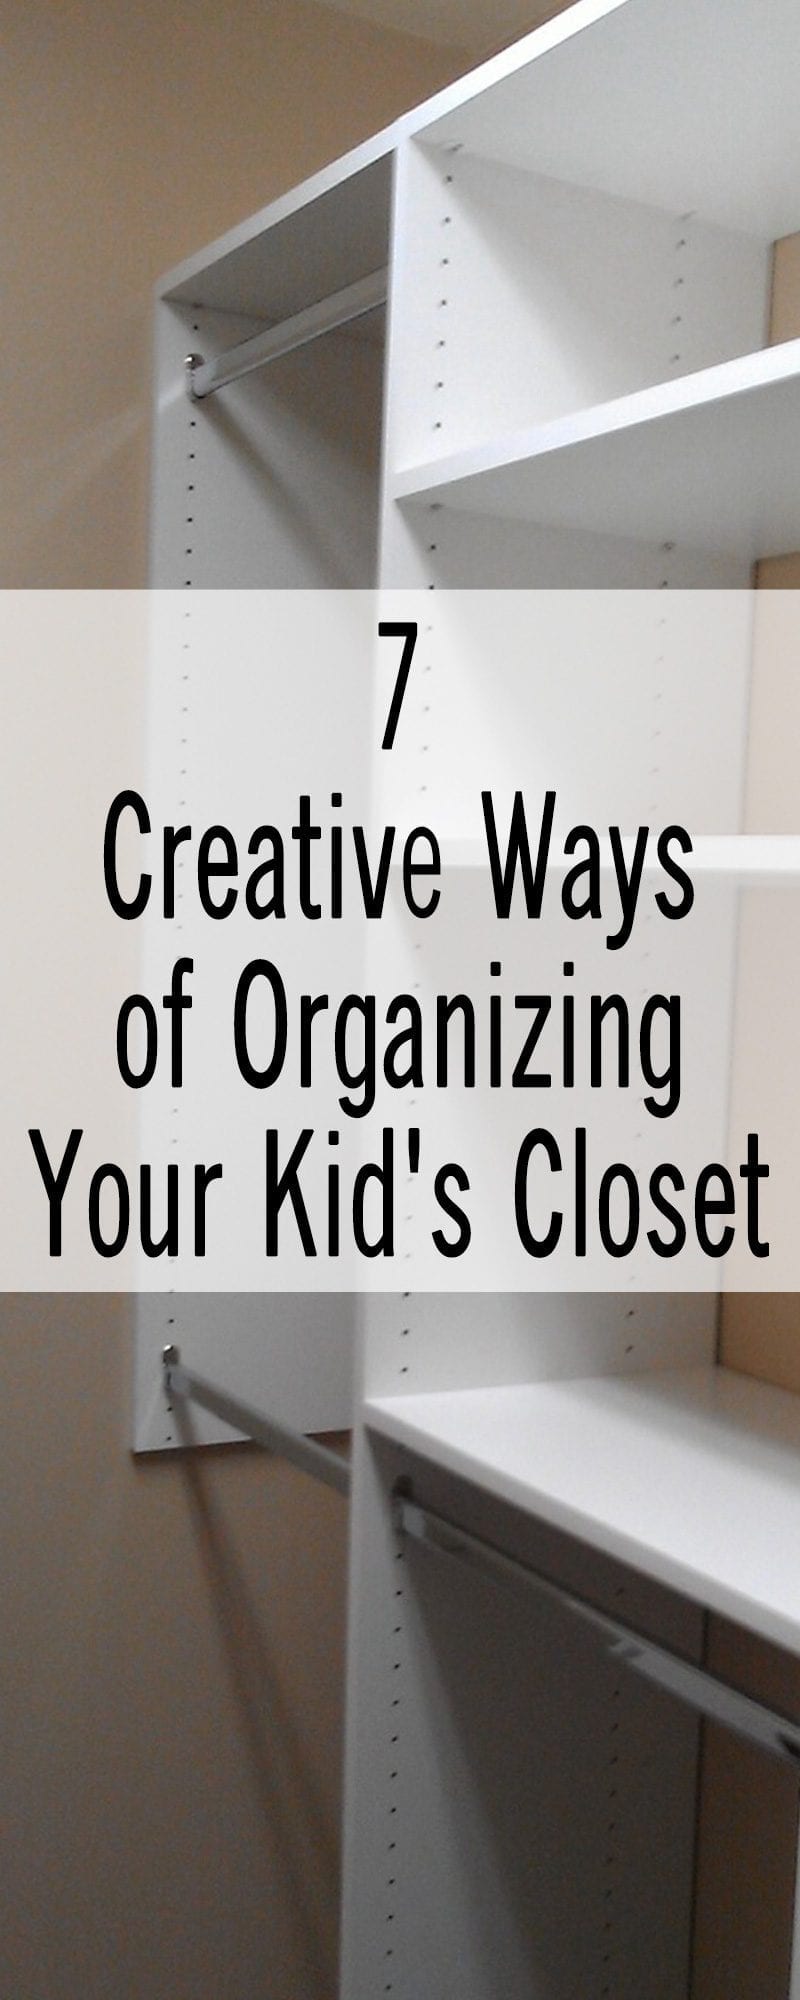 7 Creative Ways of Organizing Your Kid's Closet